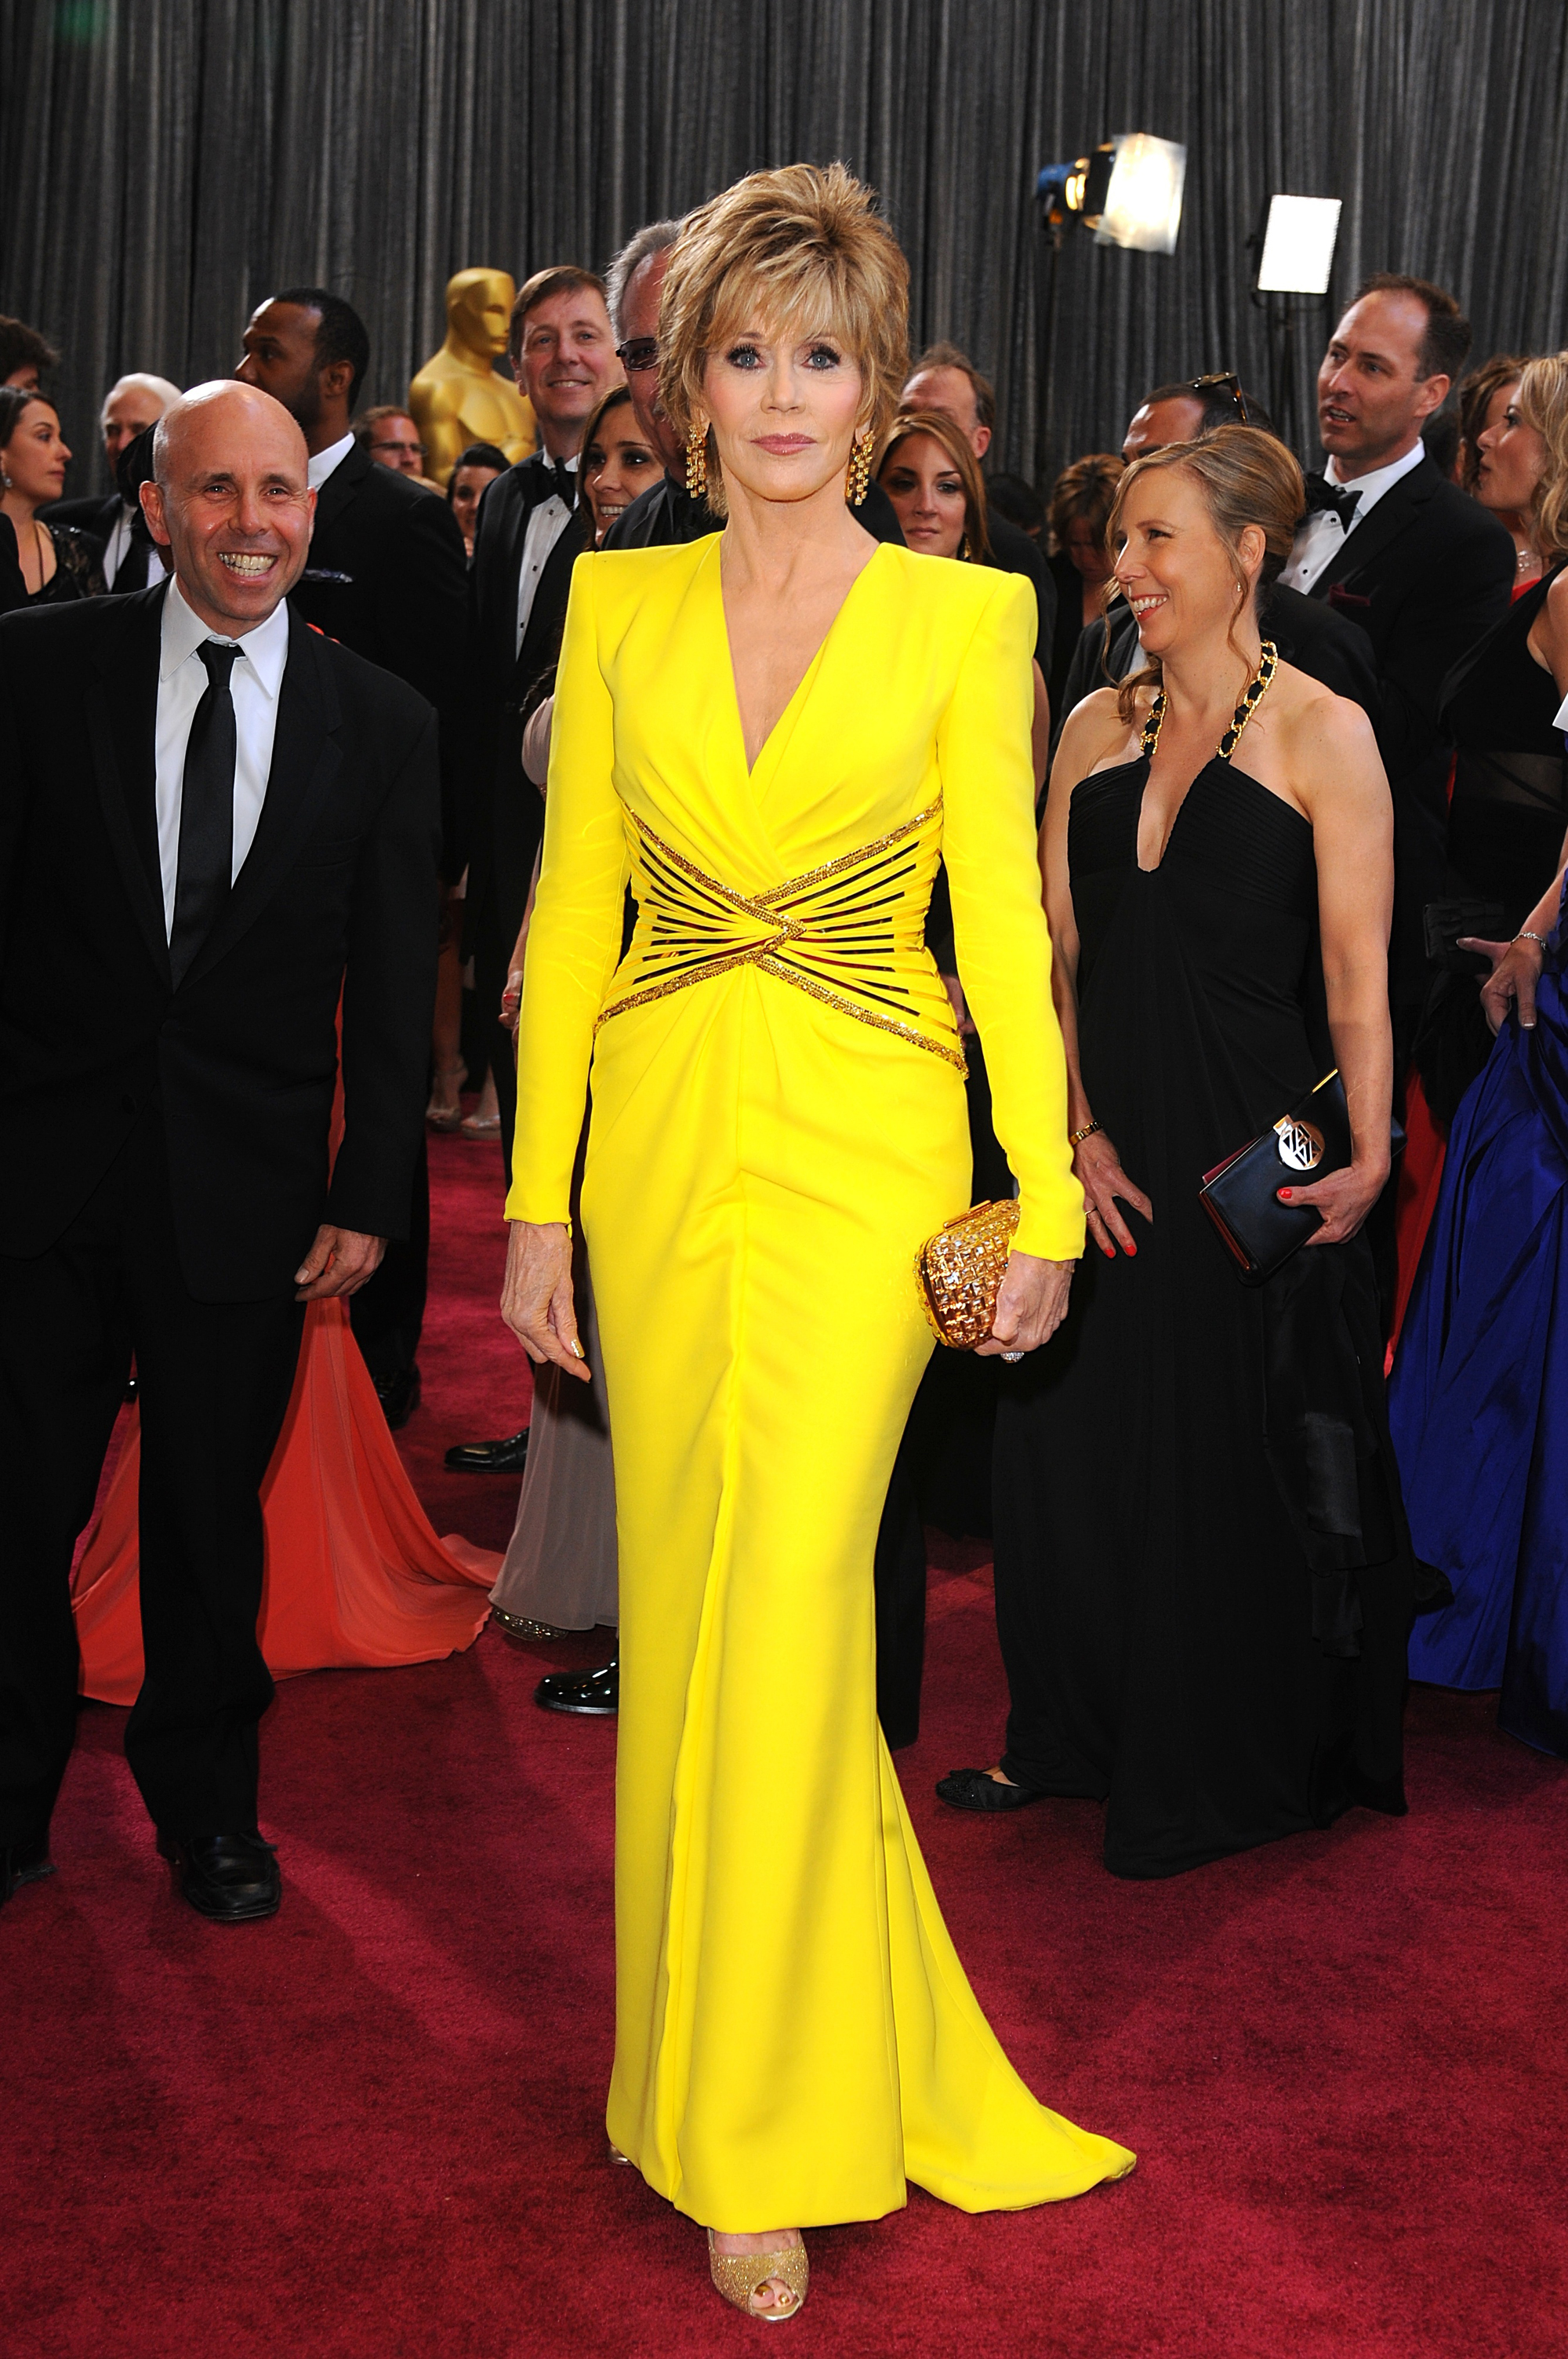 Jane Fonda arriving for the 2013 Academy Awards